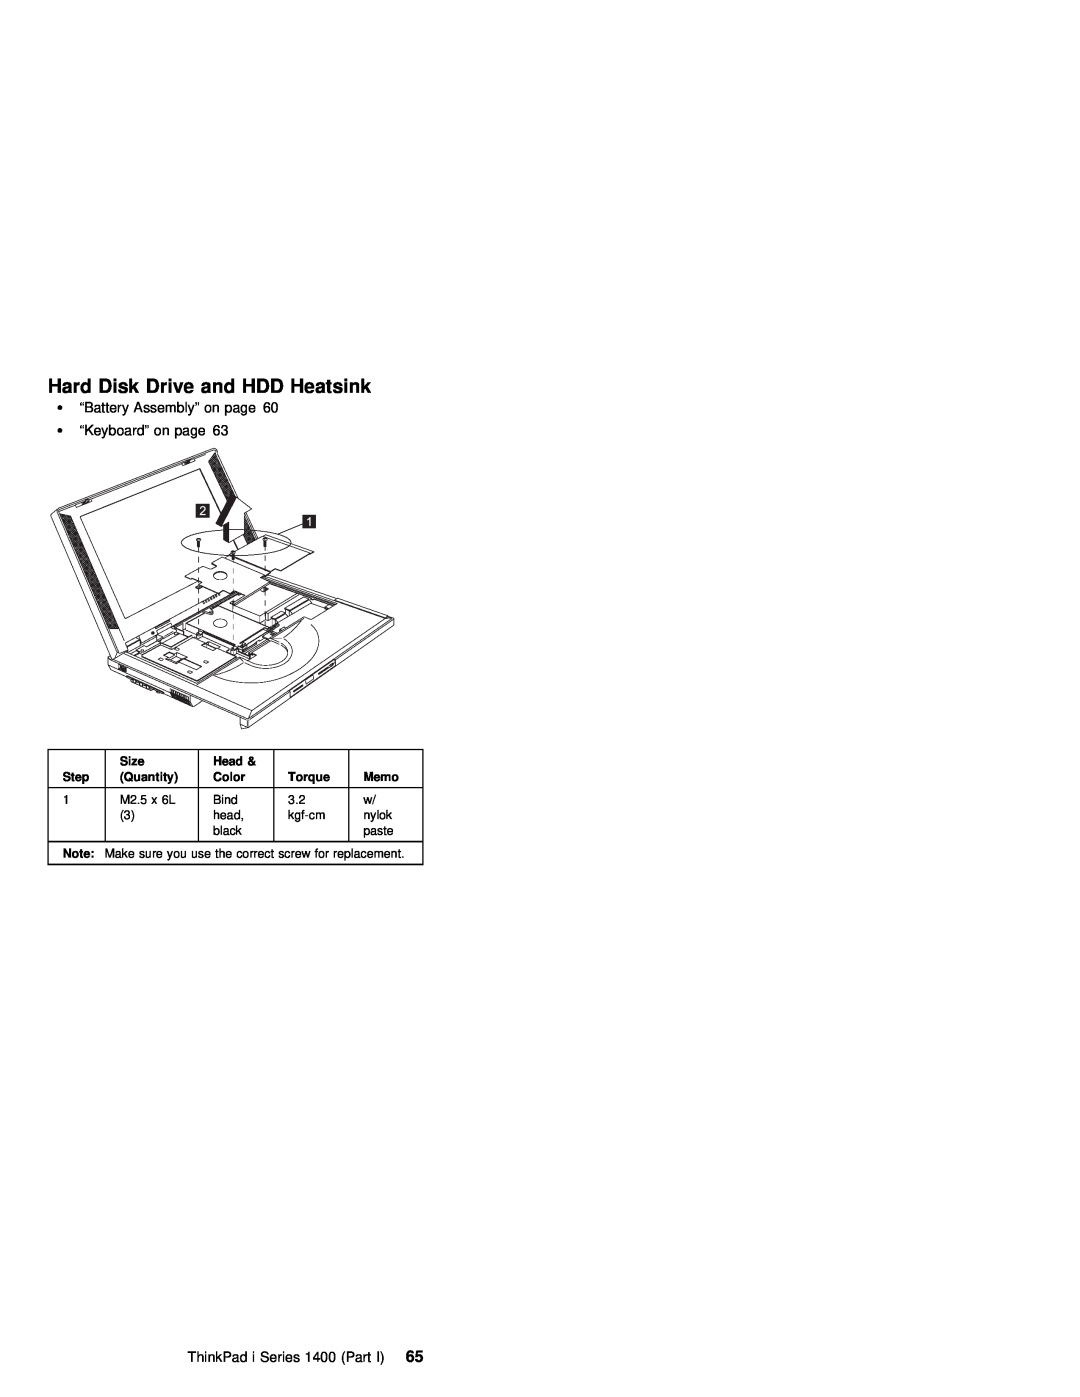 IBM 1400 (2611) manual Hard Disk Drive and HDD Heatsink, Ÿ “Battery Assembly” on page Ÿ “Keyboard” on page 